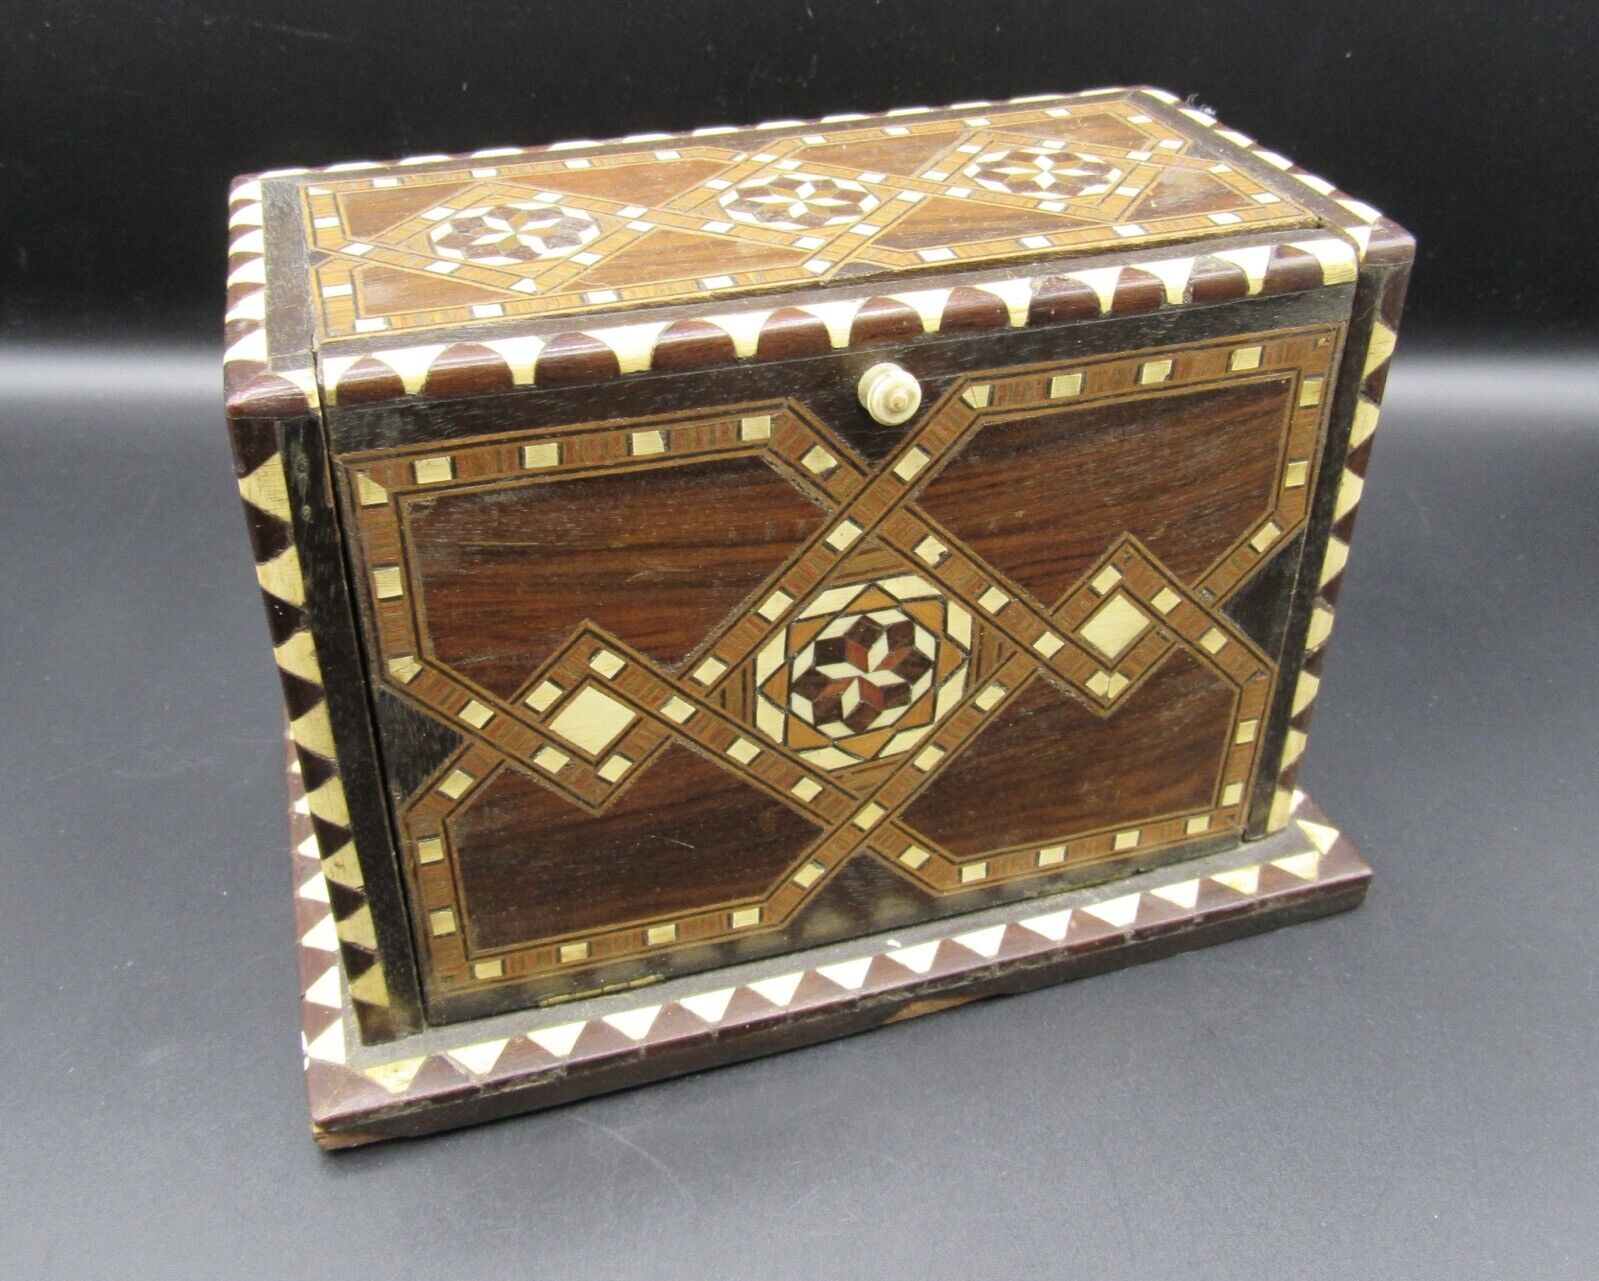 Ornate geometric inlaid wood cigarette case box/server display intarsia